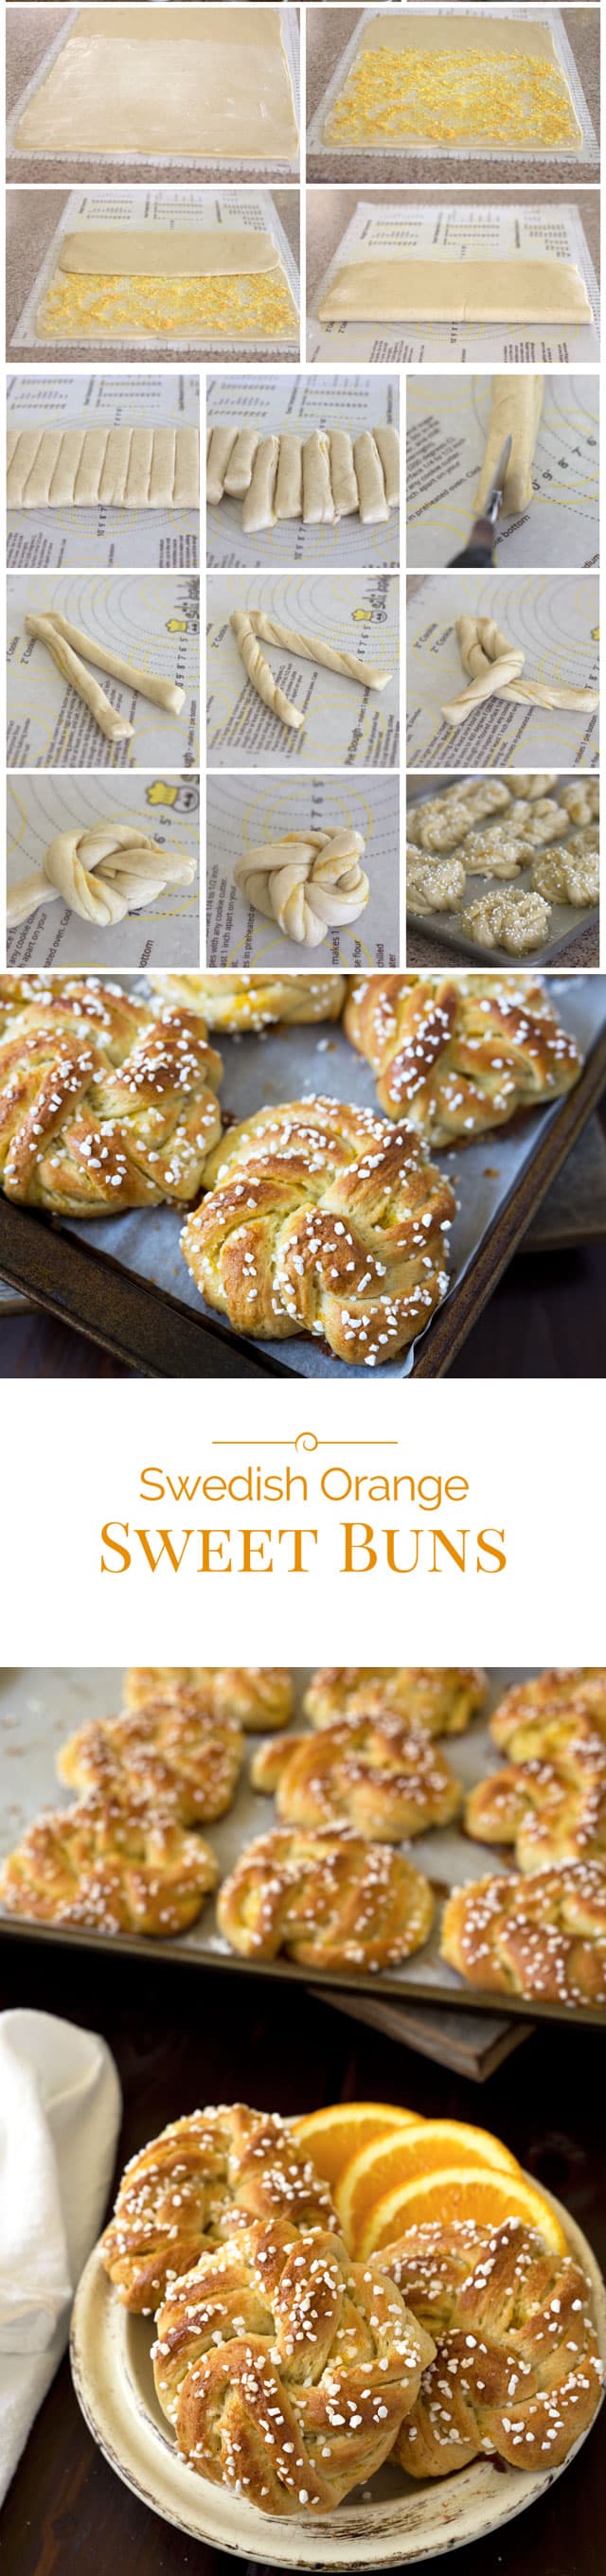 Swedish-Orange-Sweet-Buns-Collage.